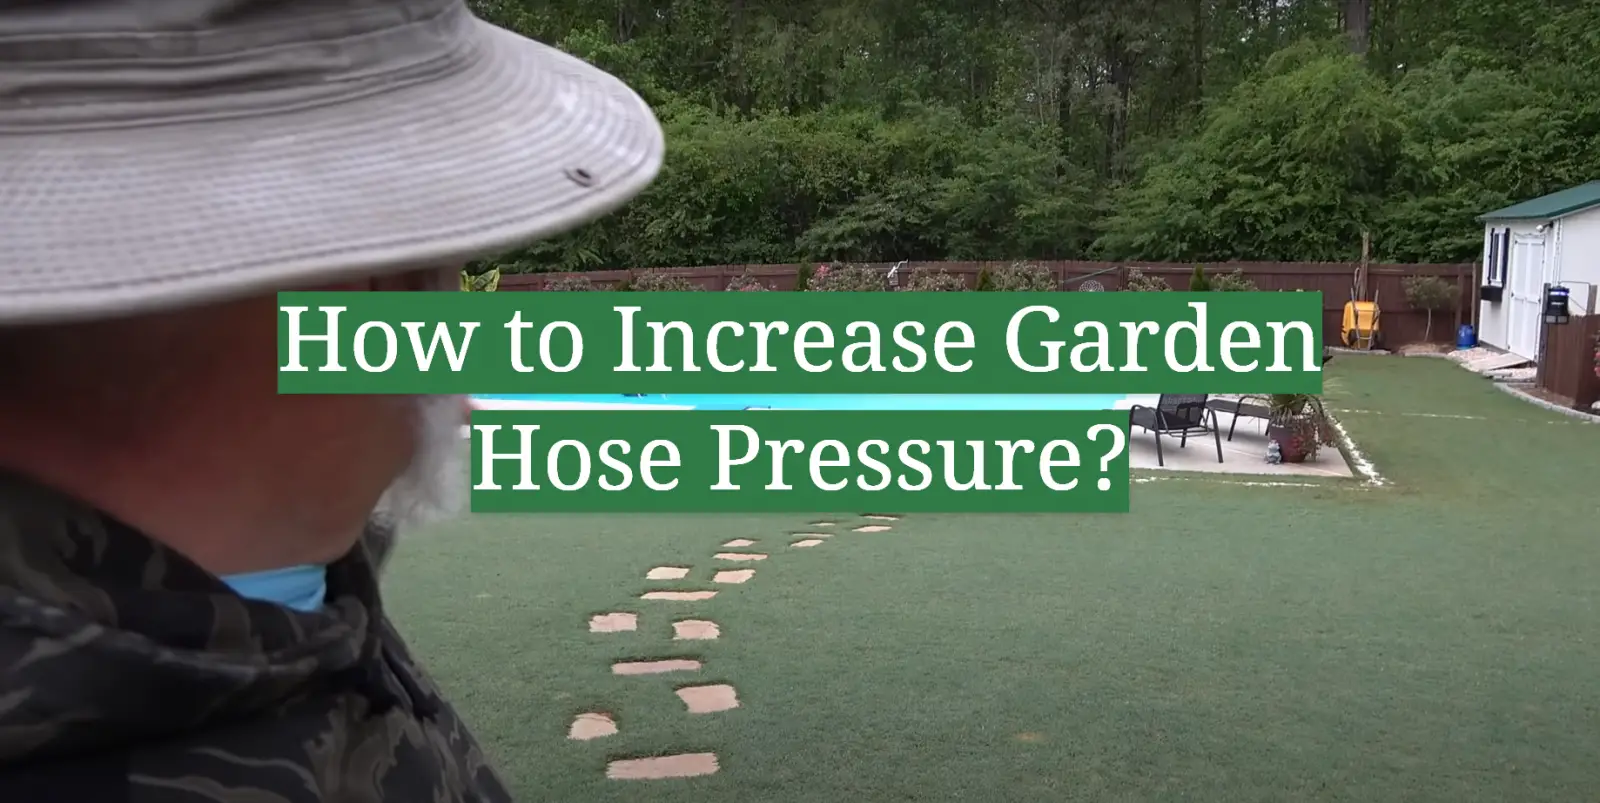 How to Increase Garden Hose Pressure?